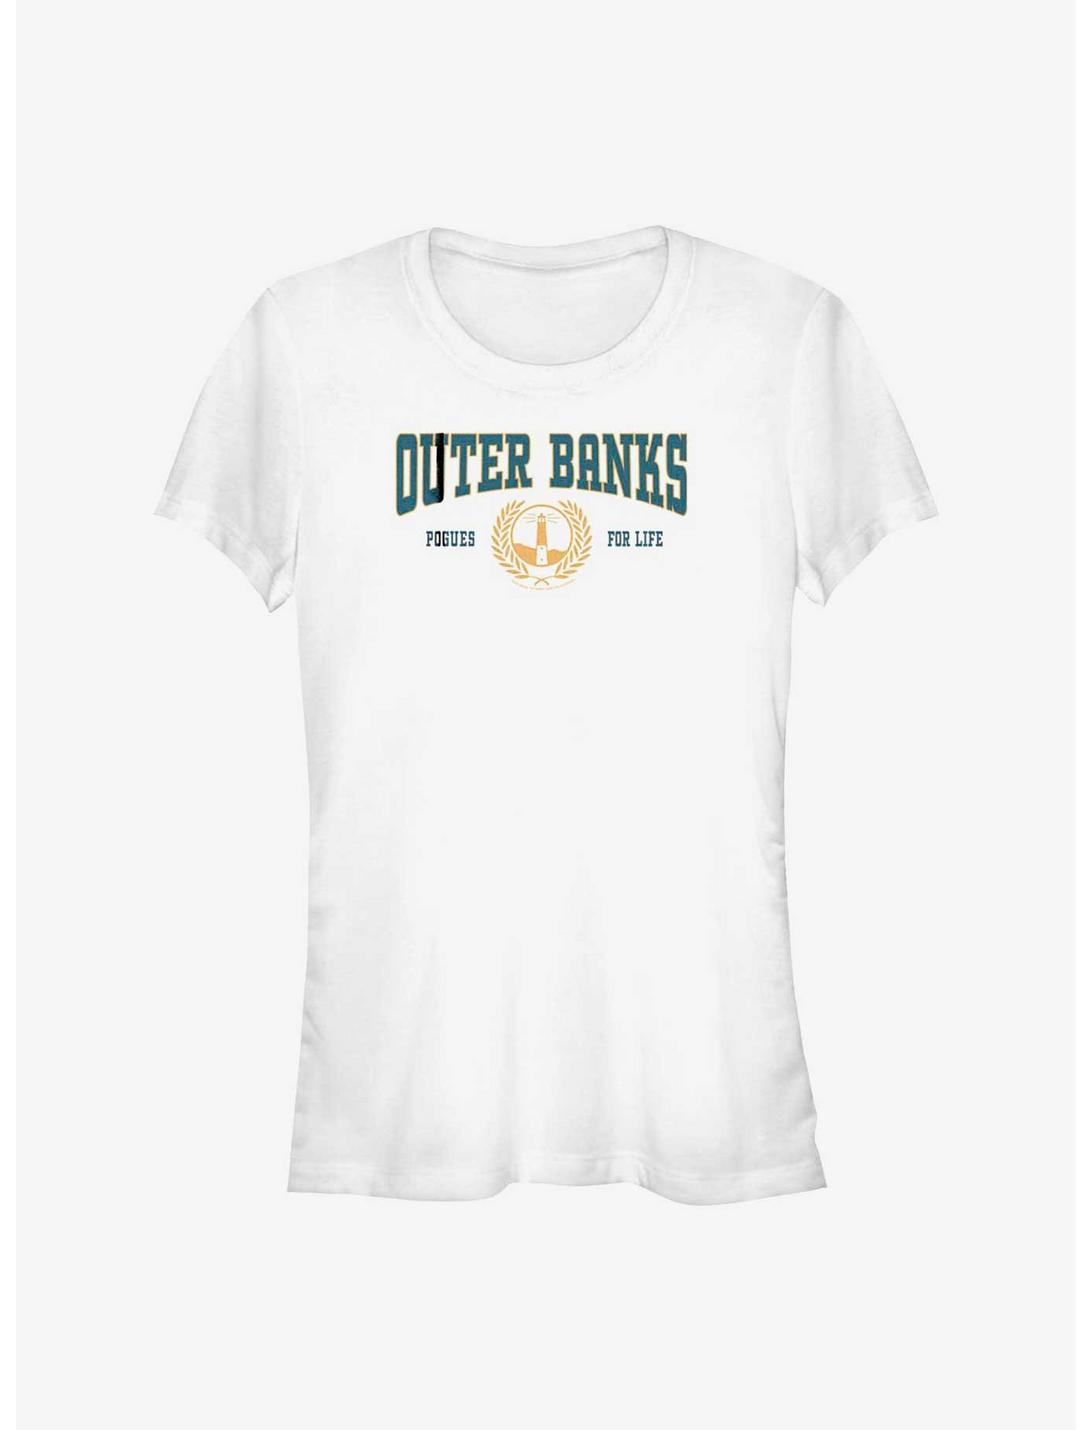 Outer Banks Collegiate Girls T-Shirt, WHITE, hi-res